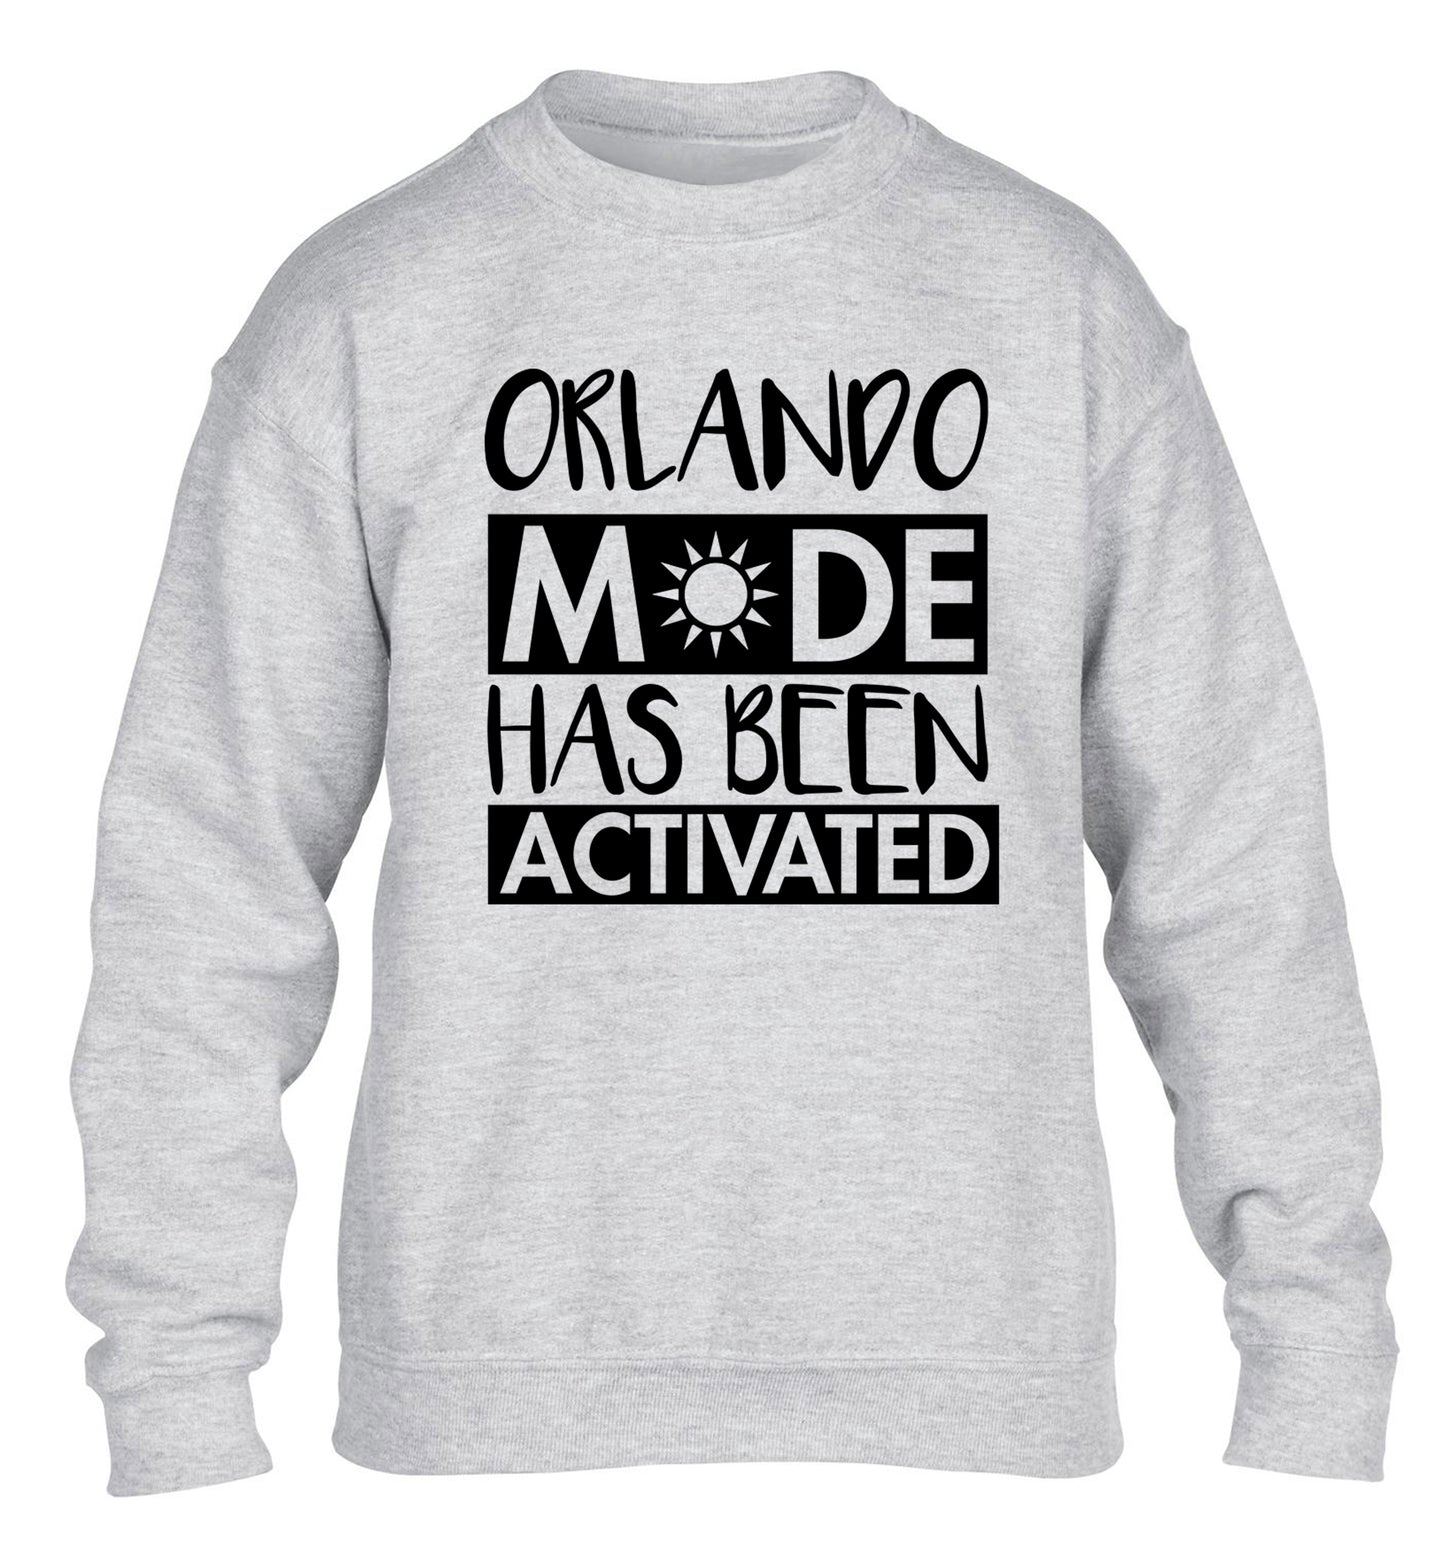 Orlando mode has been activated children's grey sweater 12-13 Years